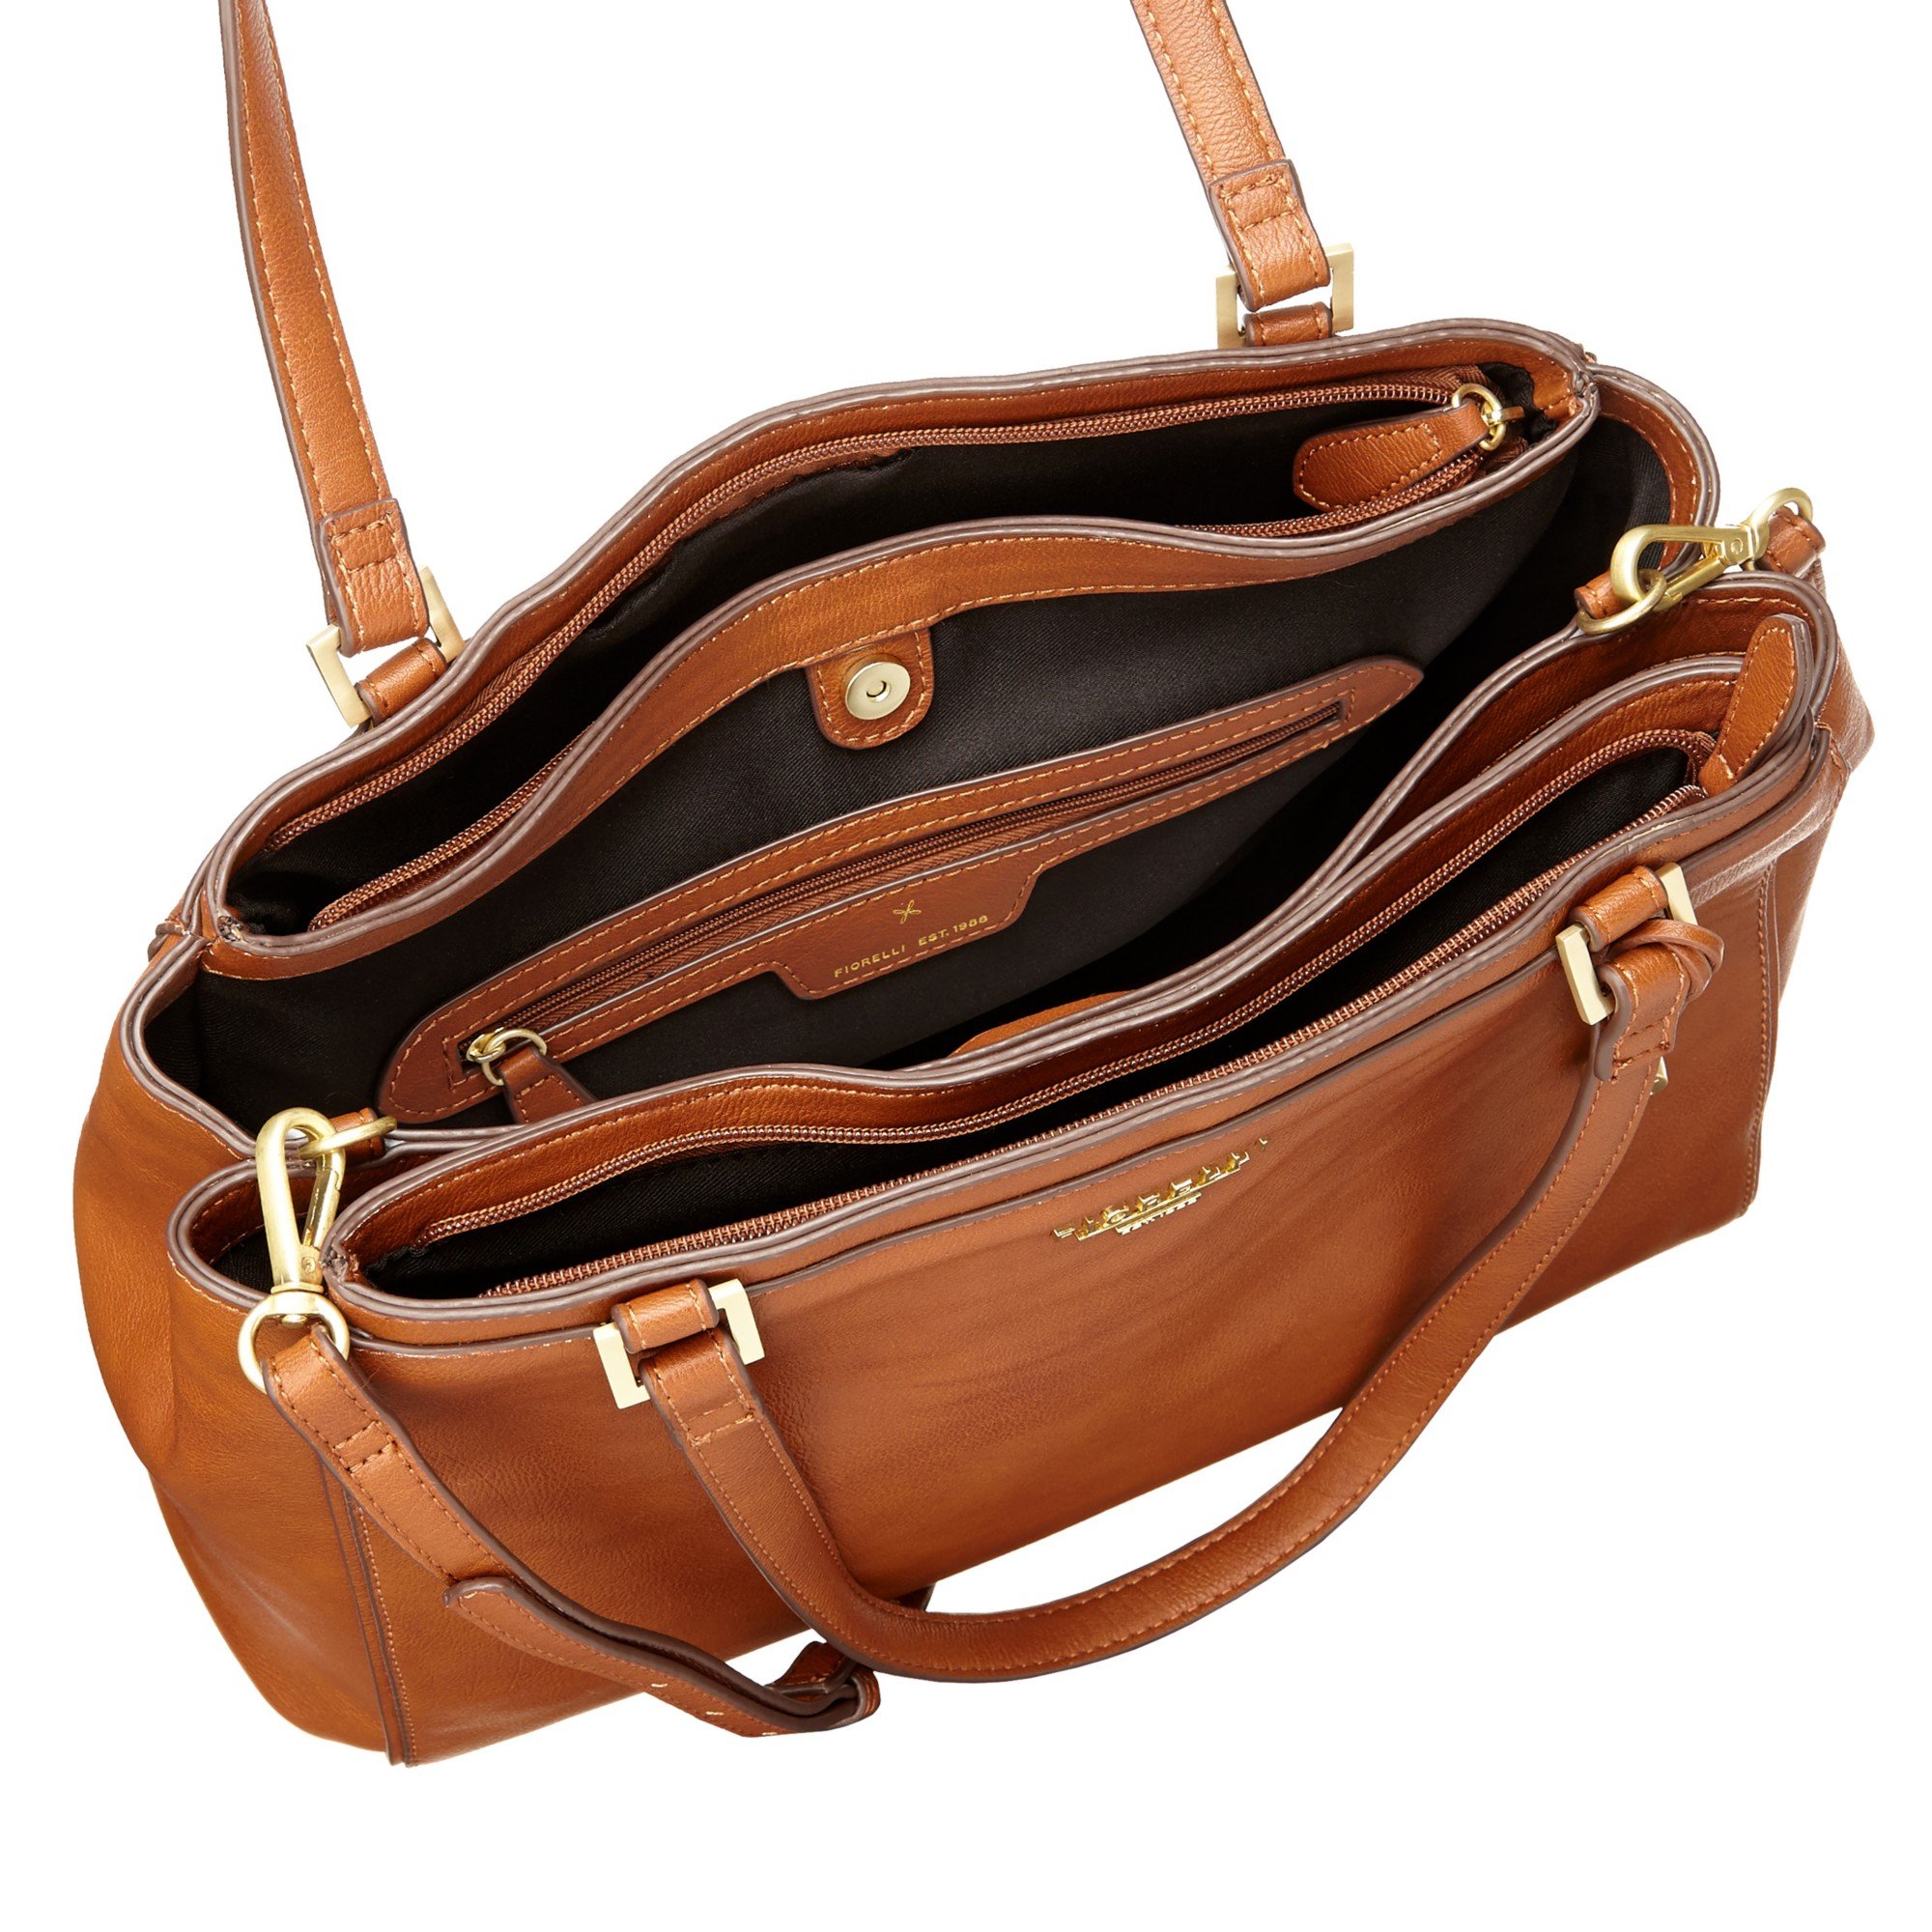 Fiorelli Sophia Large Shoulder Bag in Tan (Brown) - Lyst